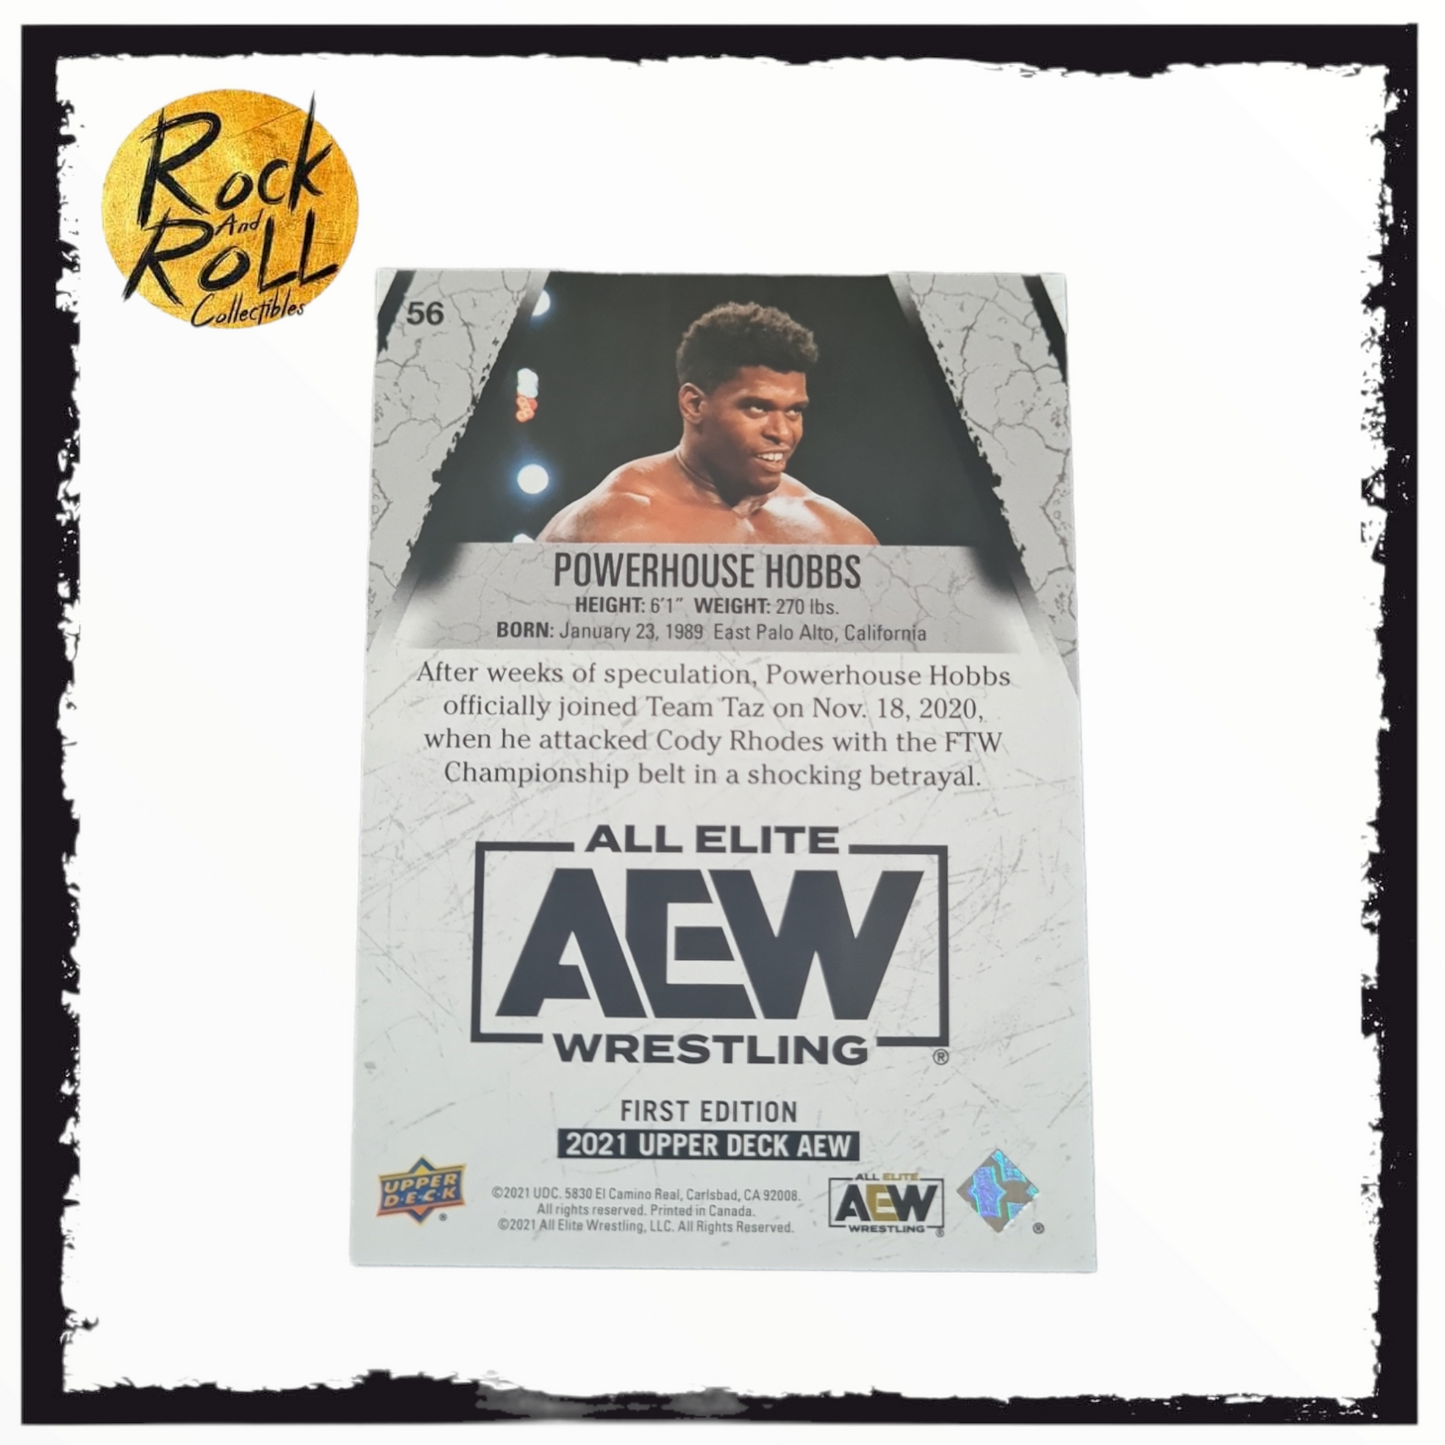 2021 Upper Deck AEW All Elite Wrestling Exclusives /100 Powerhouse Hobbs #56